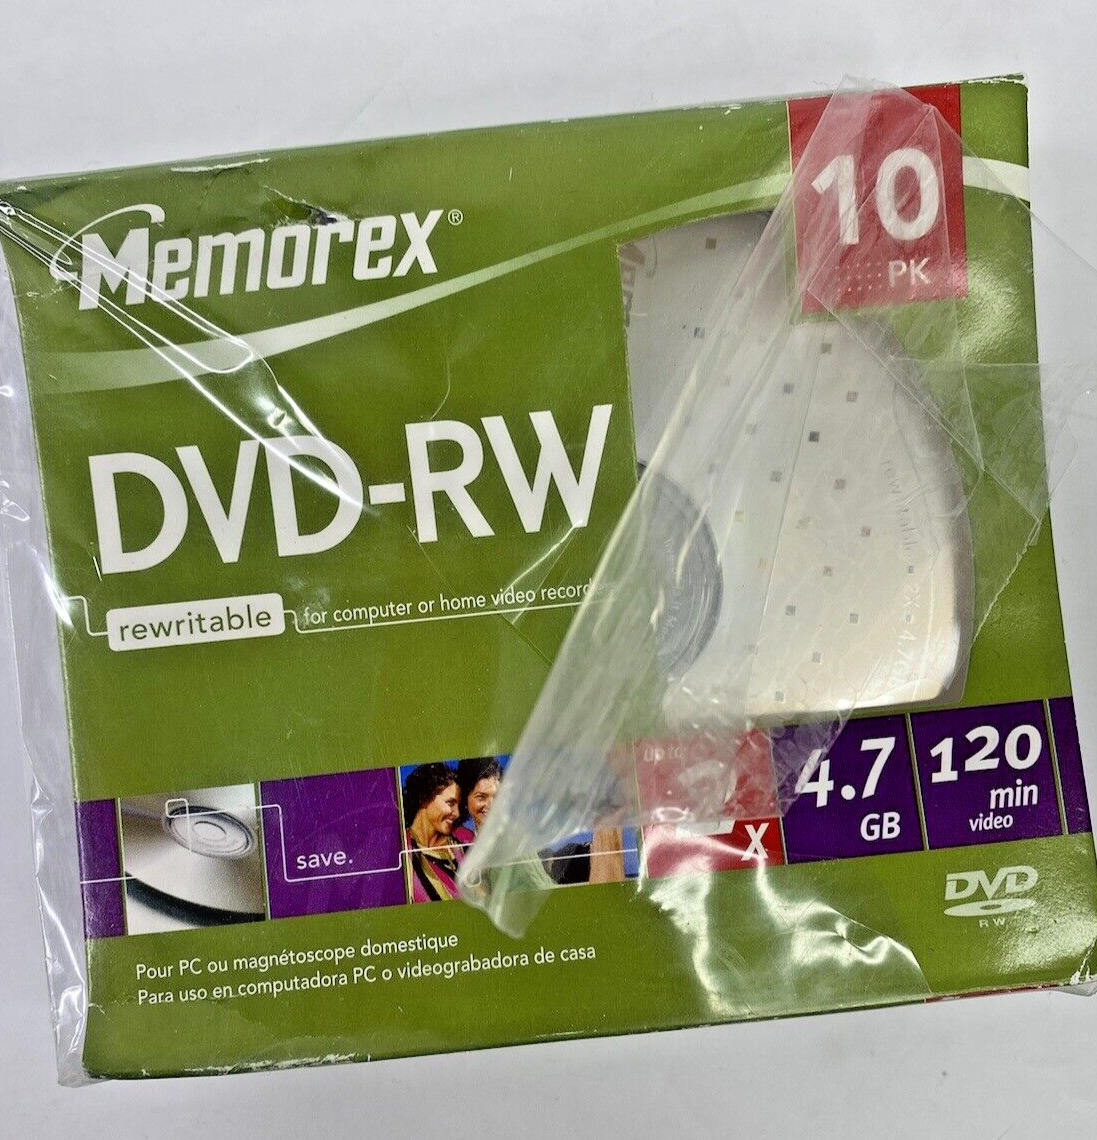 NEW 8 pk Memorex DVD-RW 2x 4.7GB 120min Storage Media Rewritable Discs Open Box